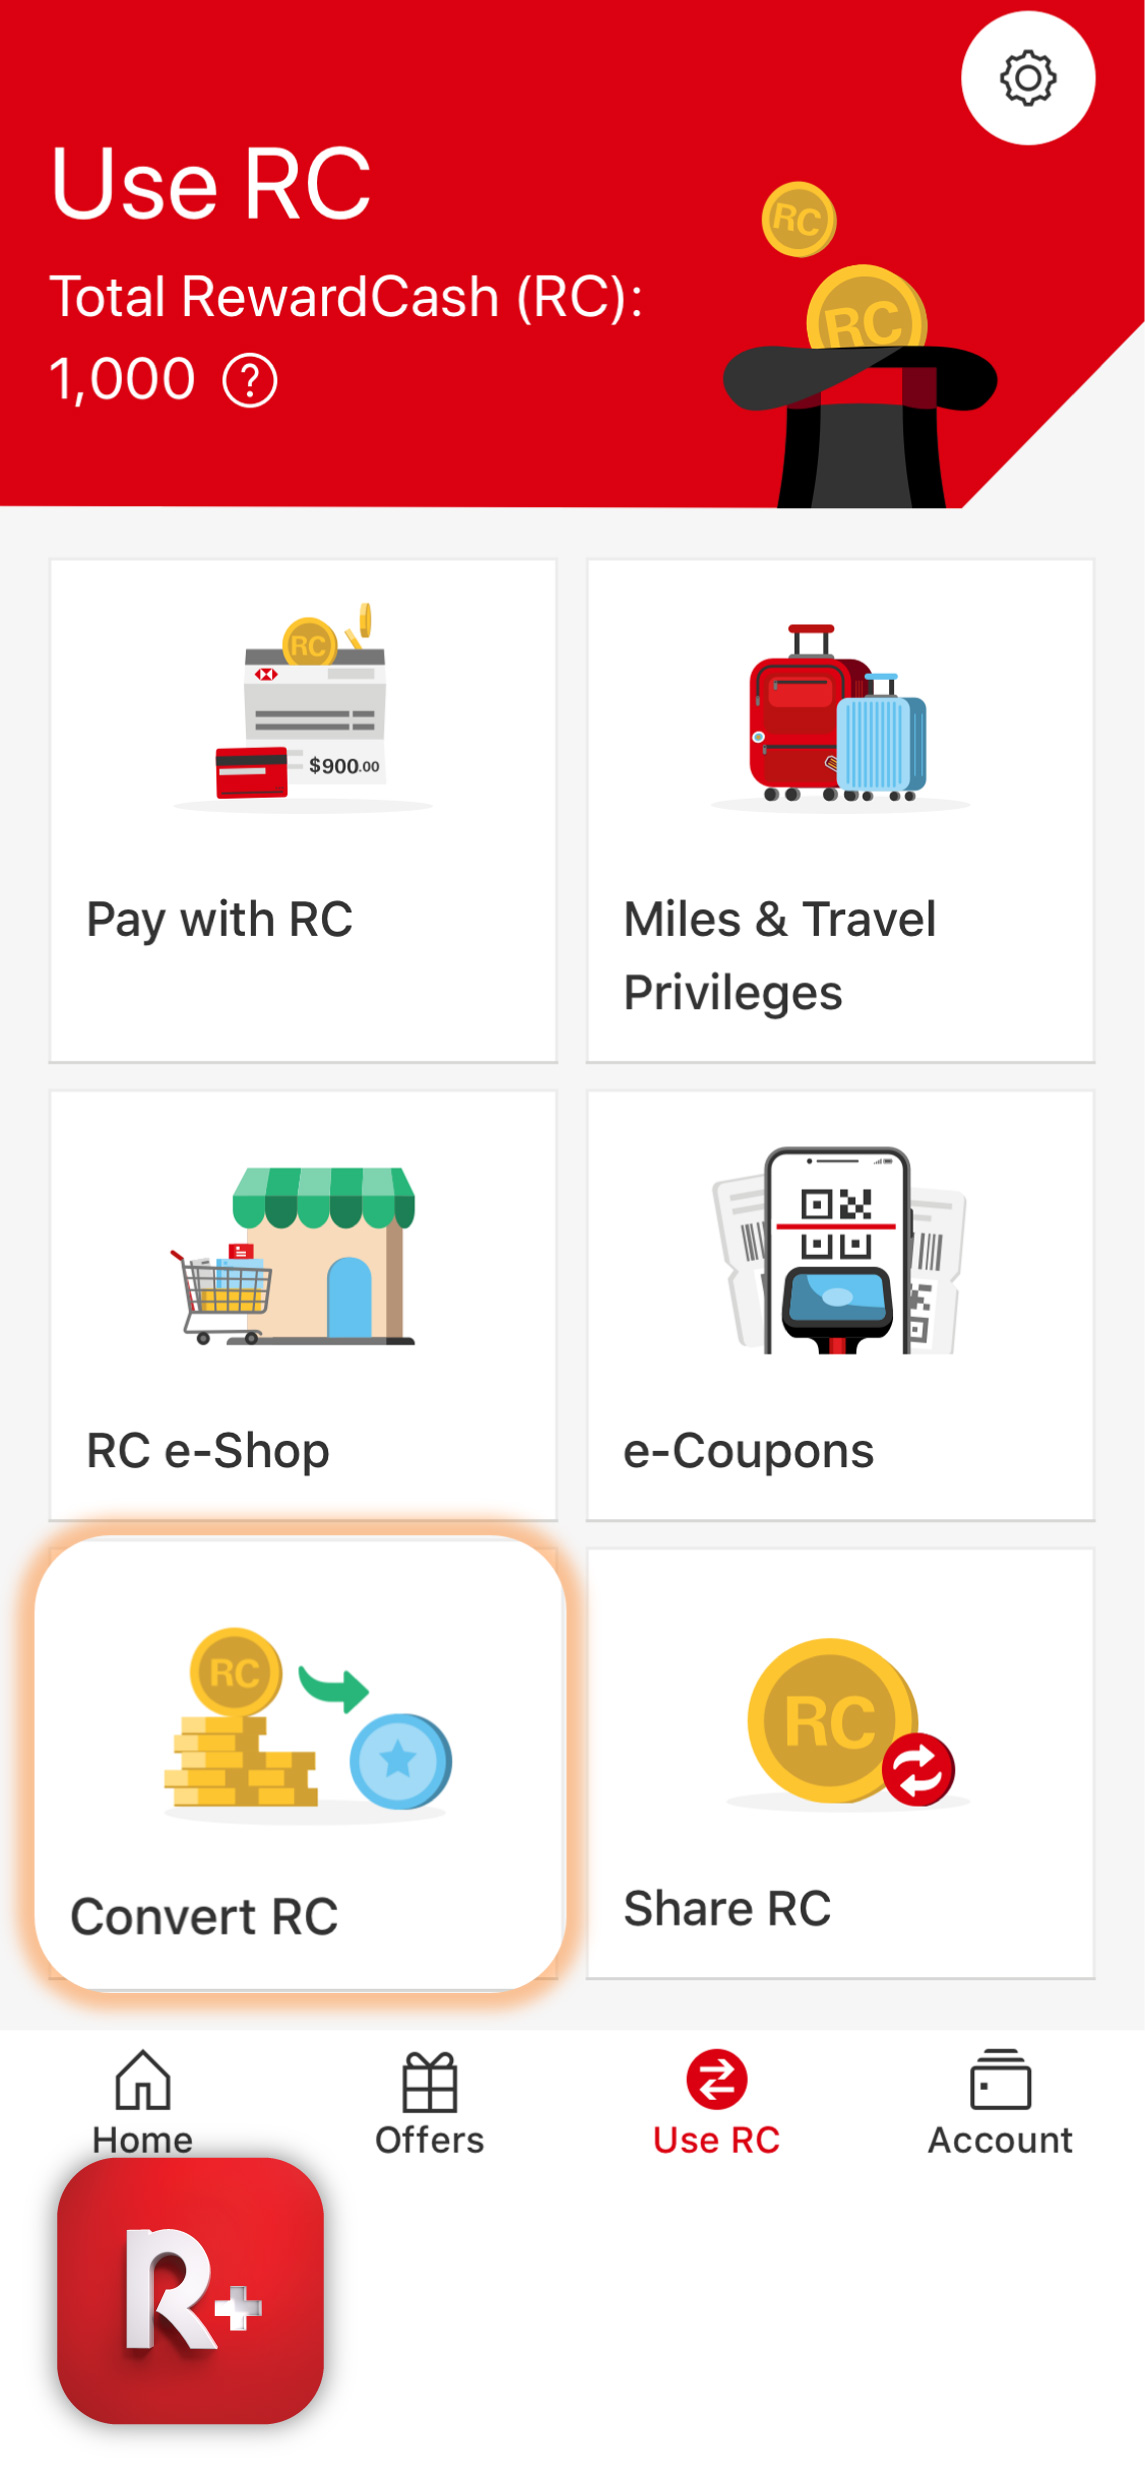 Log on HSBC Reward+, choose “Convert RC” and then select MTR Mobile